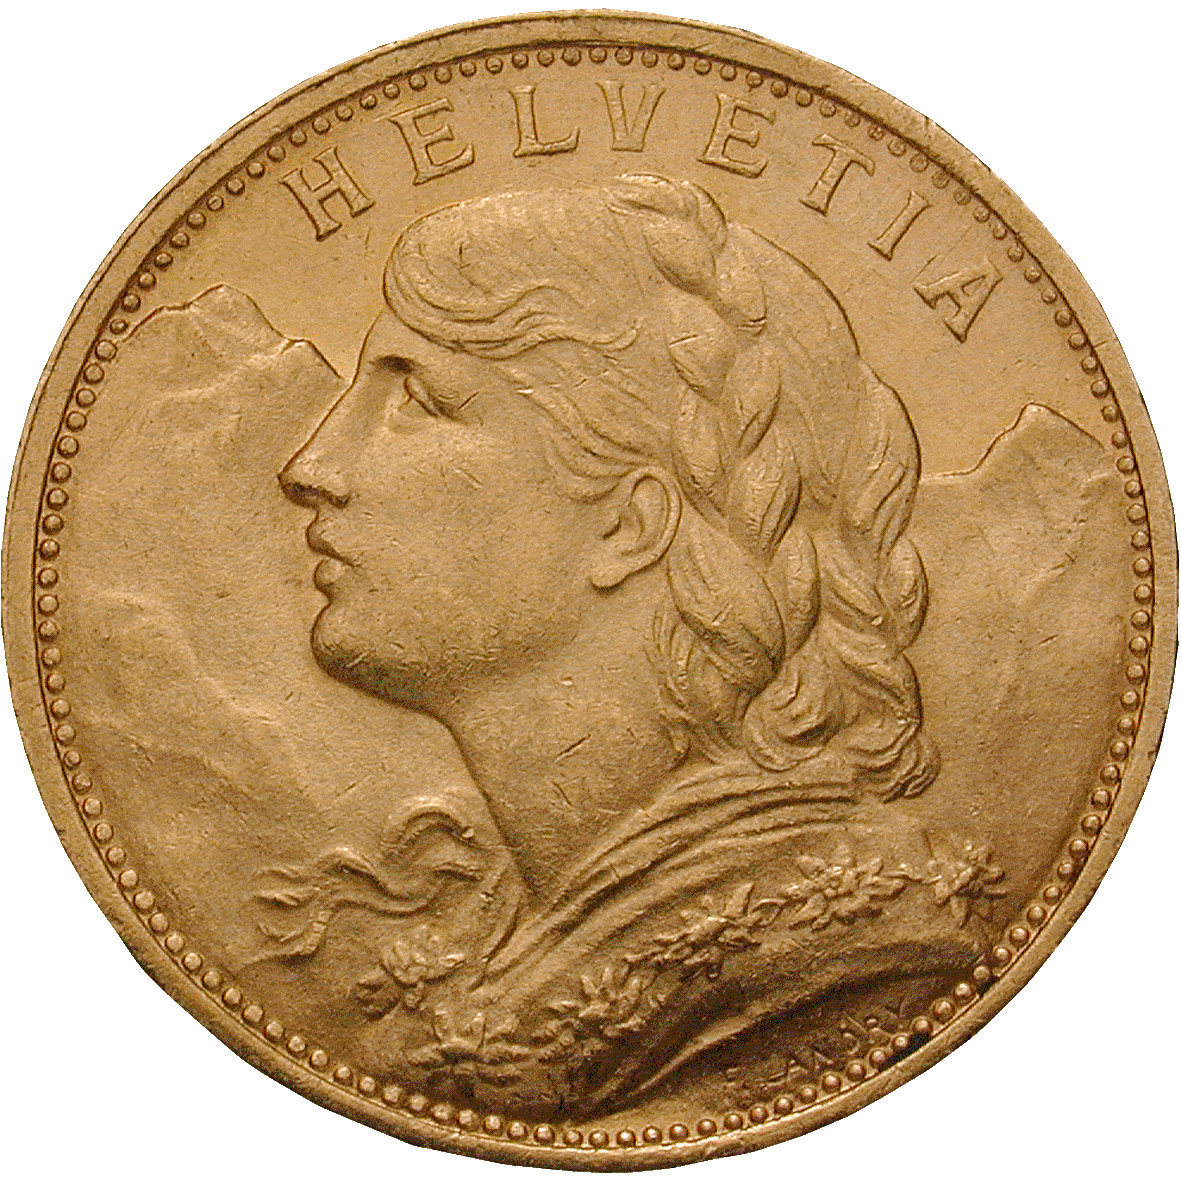 Schweizerische Eidgenossenschaft, 20 Franken (Vreneli) 1897 (obverse)